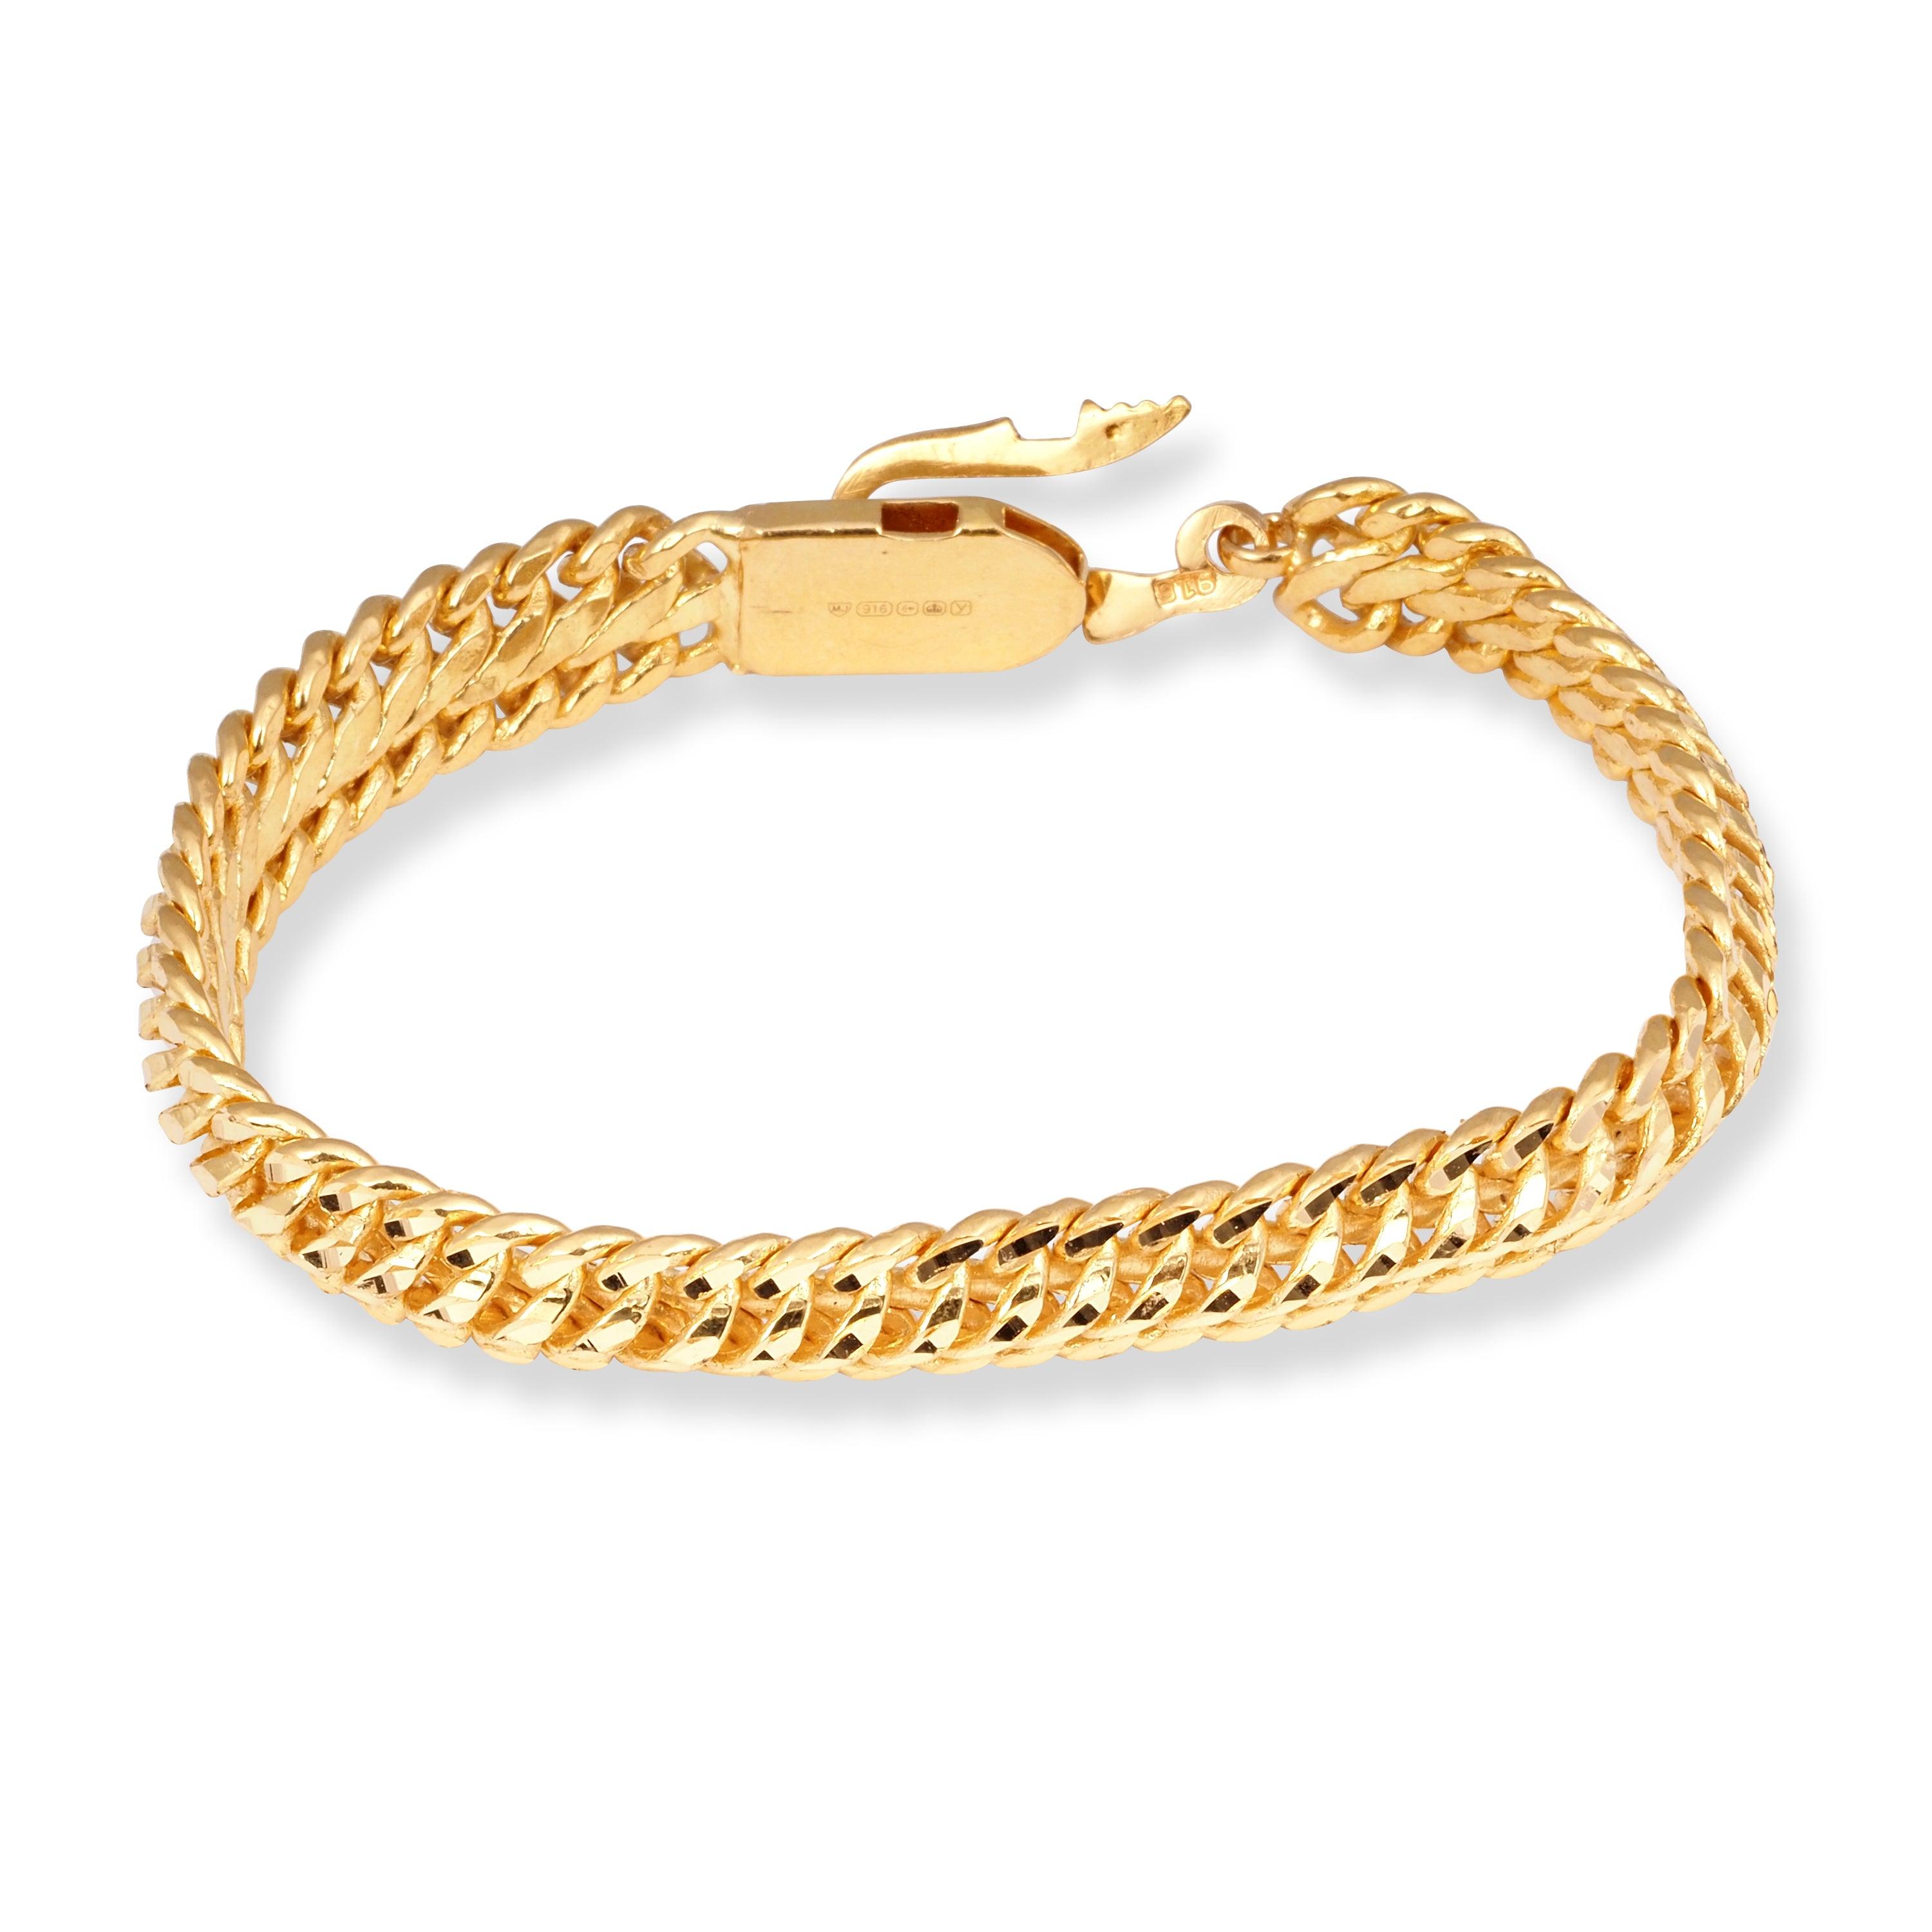 22ct Gold Bracelets Indian Bracelet with Gold Beads | PureJewels